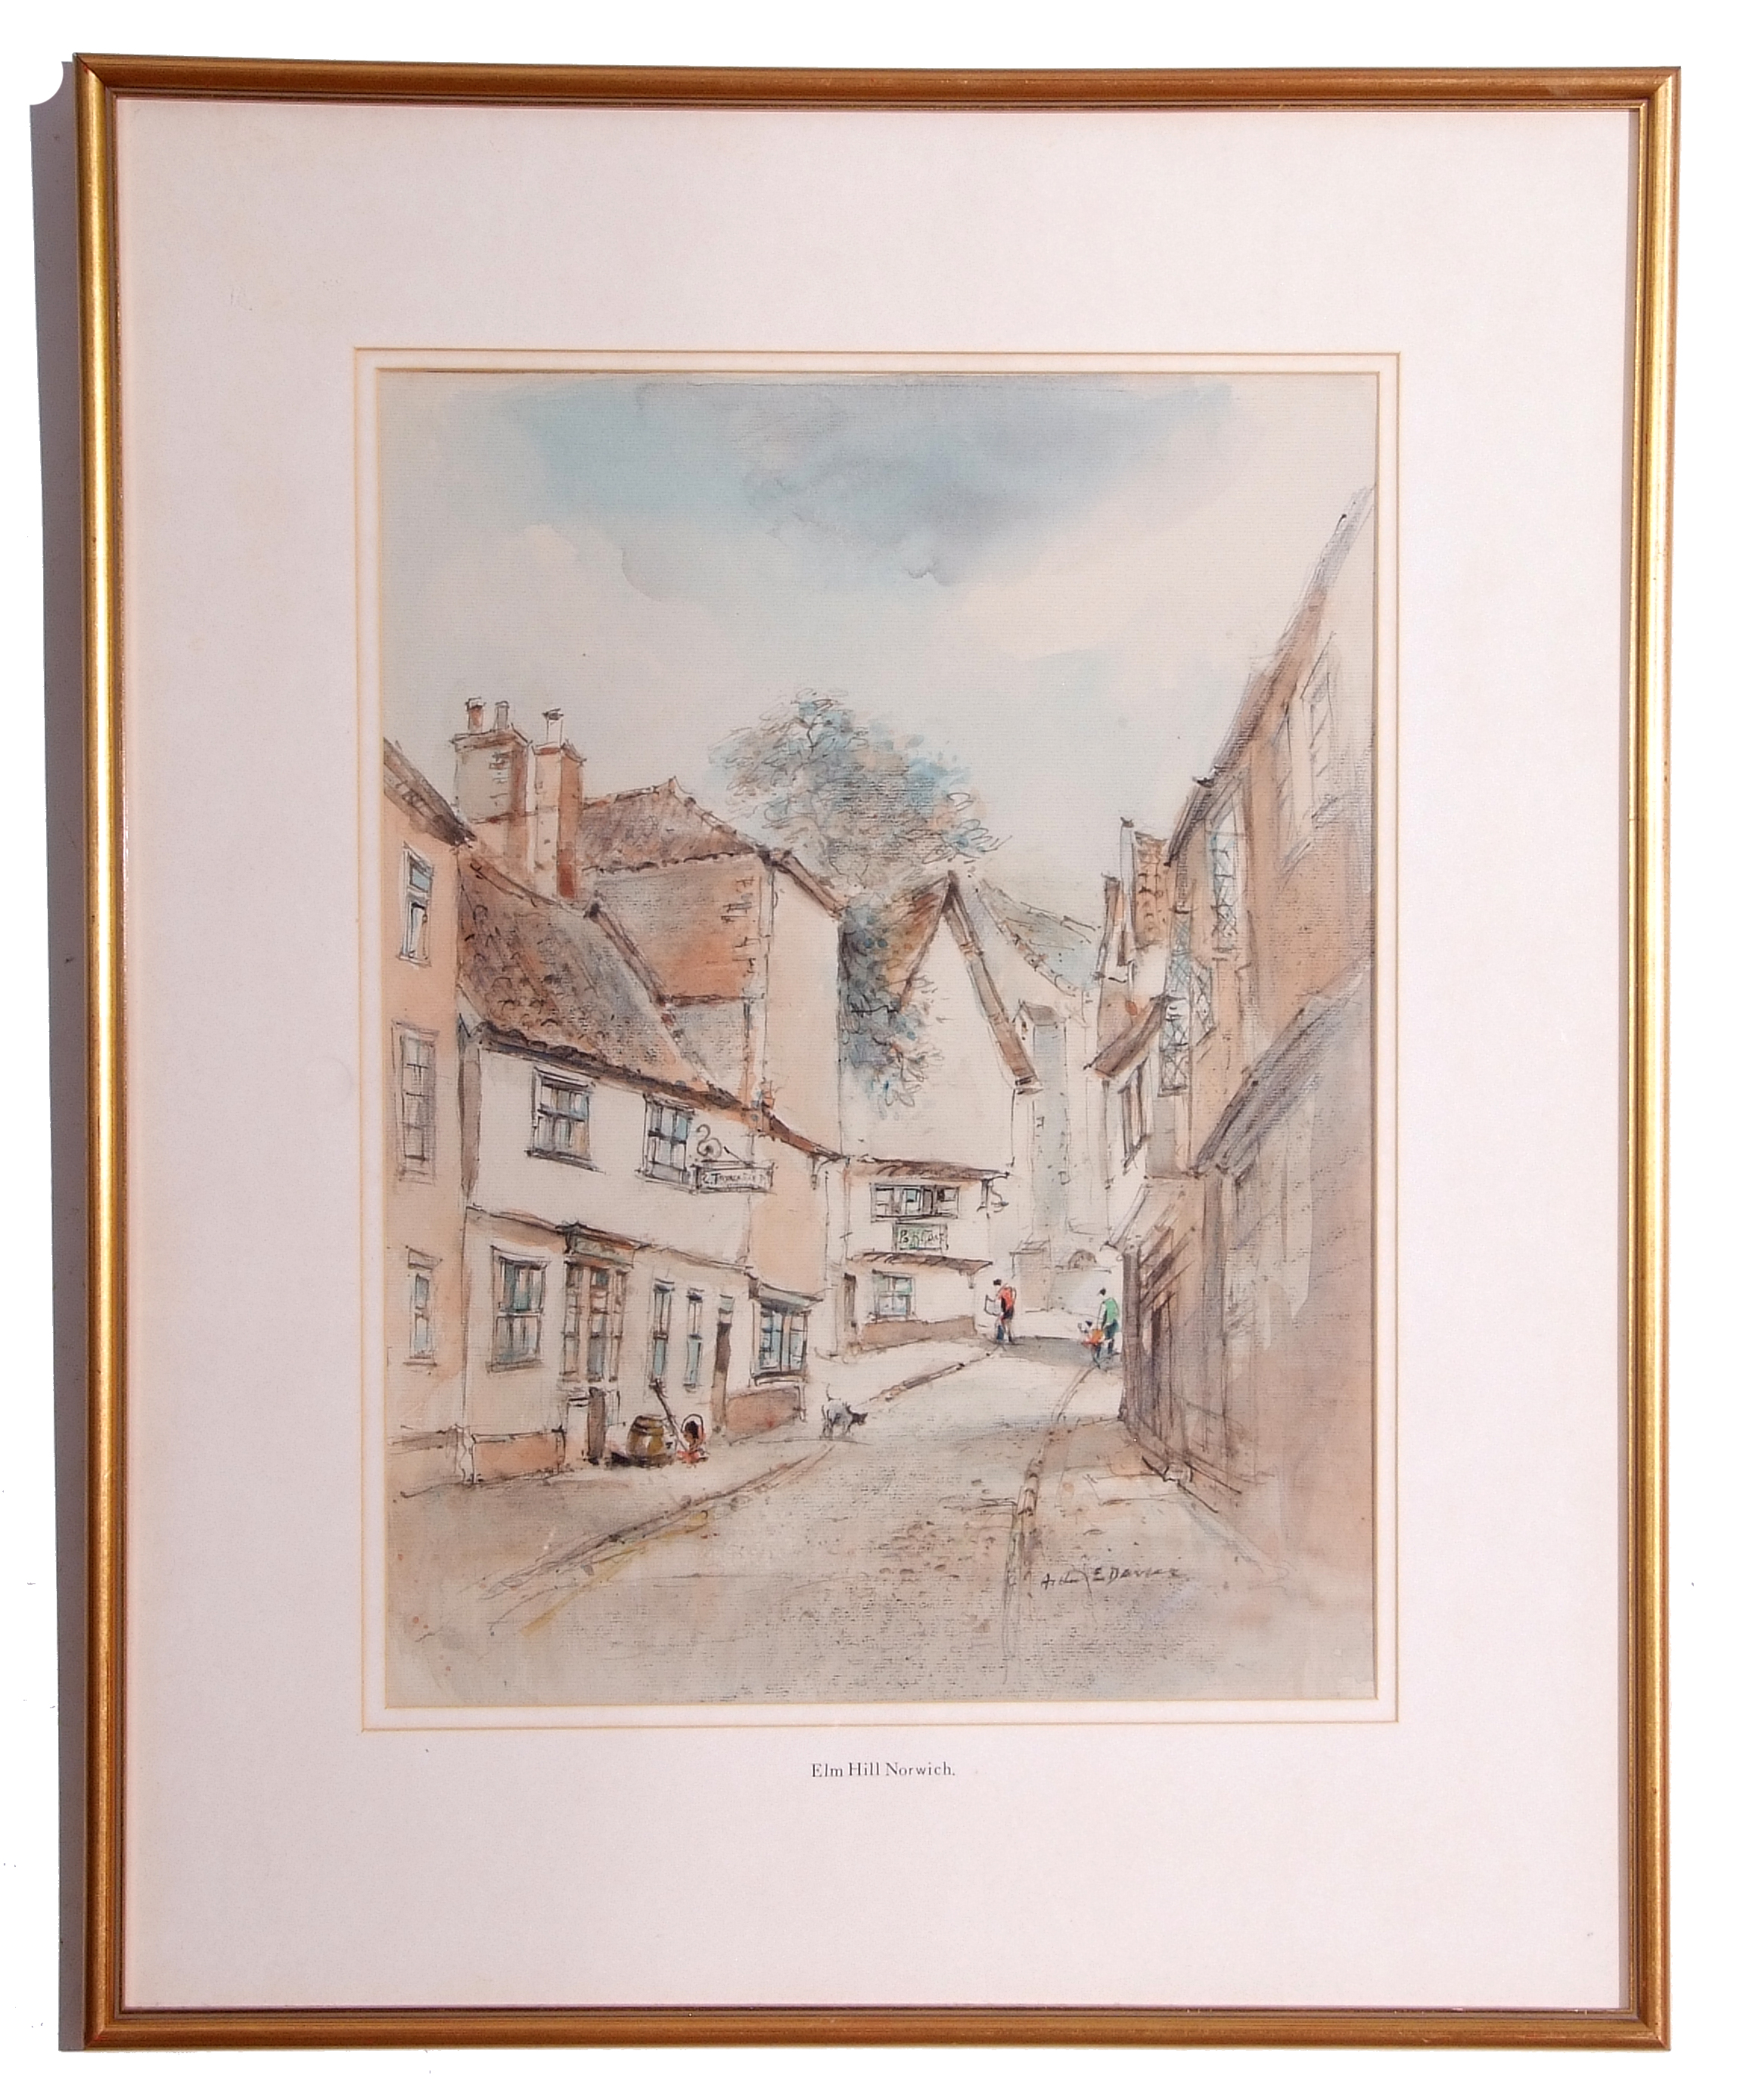 AR Arthur Edward Davies, RBA, RCA (1893-1988), "Elm Hill, Norwich", pencil and watercolour, signed